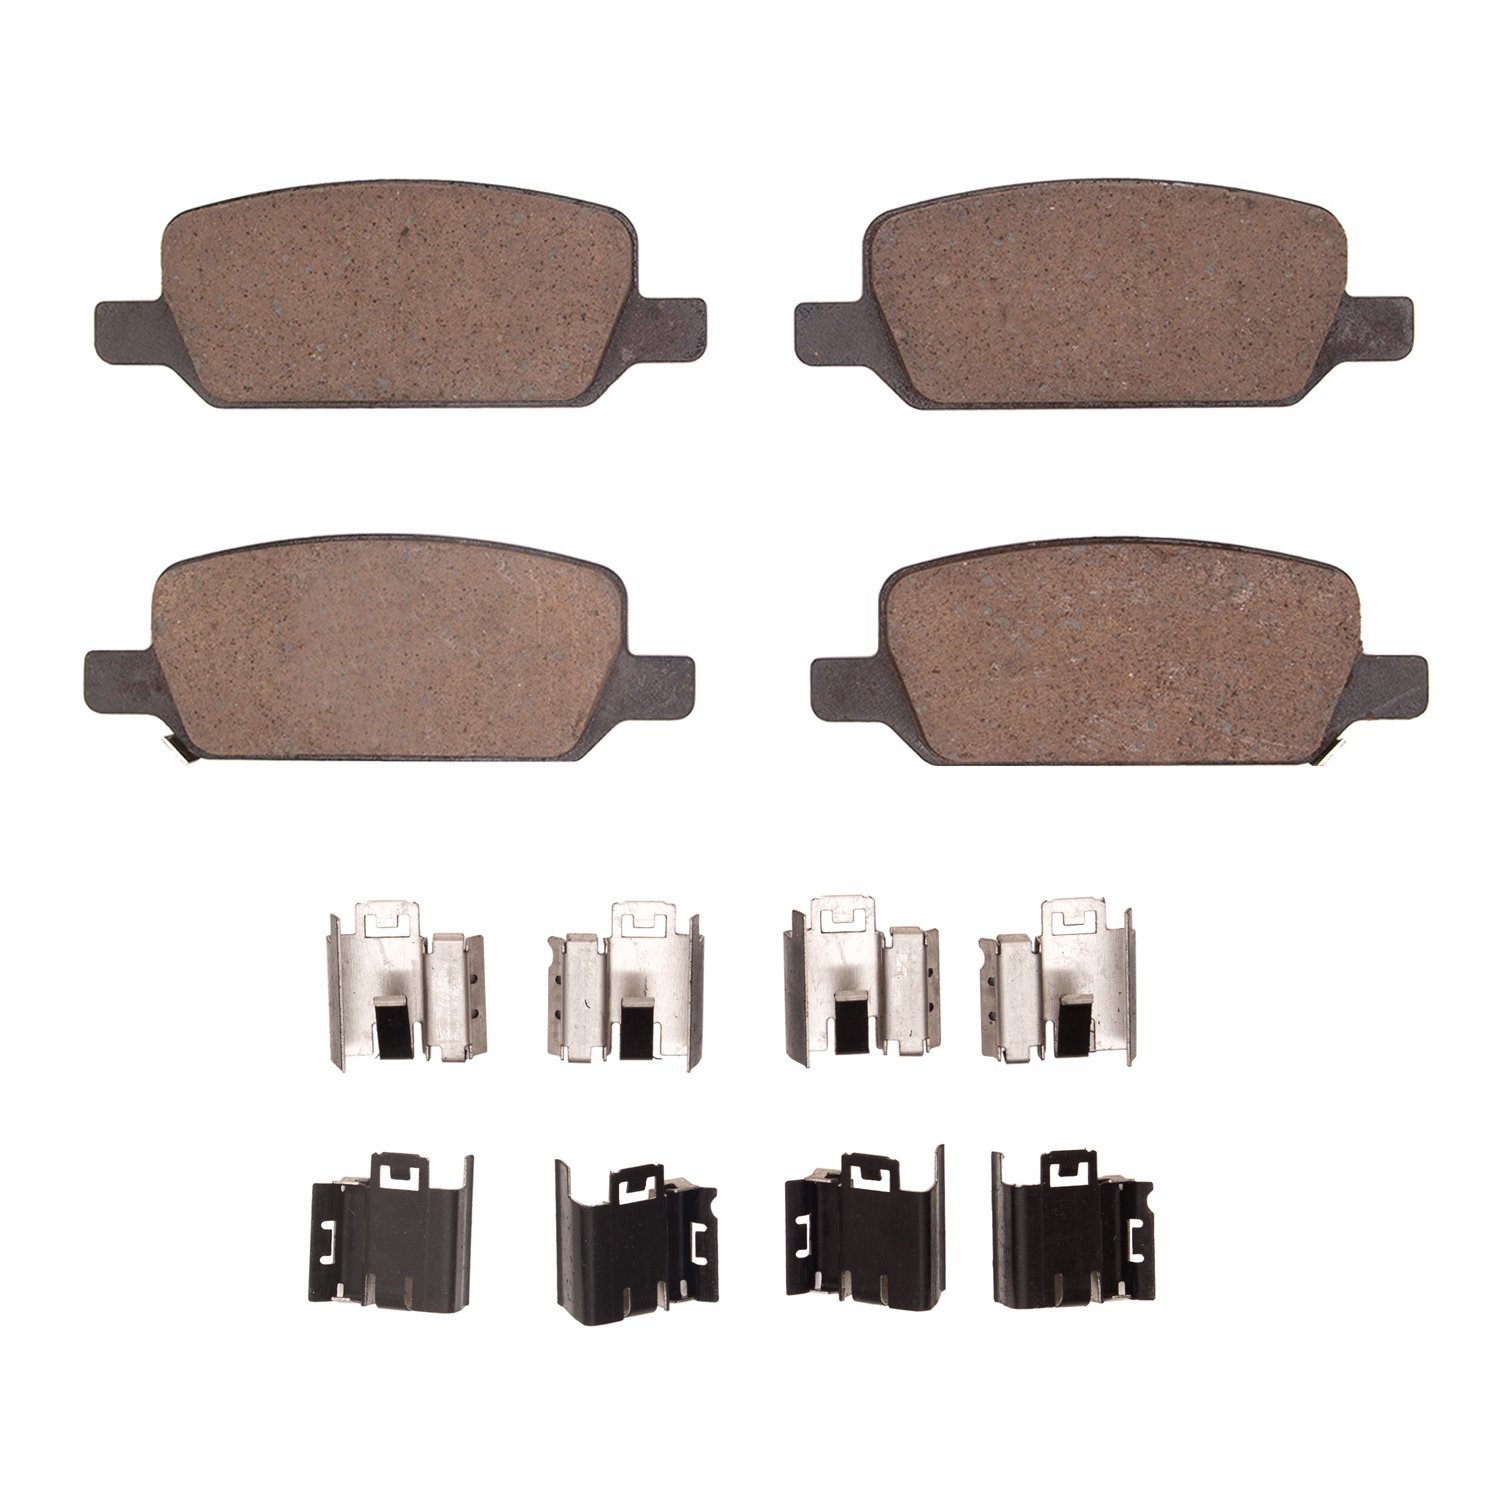 1551-2283-01 5000 Advanced Ceramic Brake Pads & Hardware Kit, Fits Select Tesla, Position: Rear